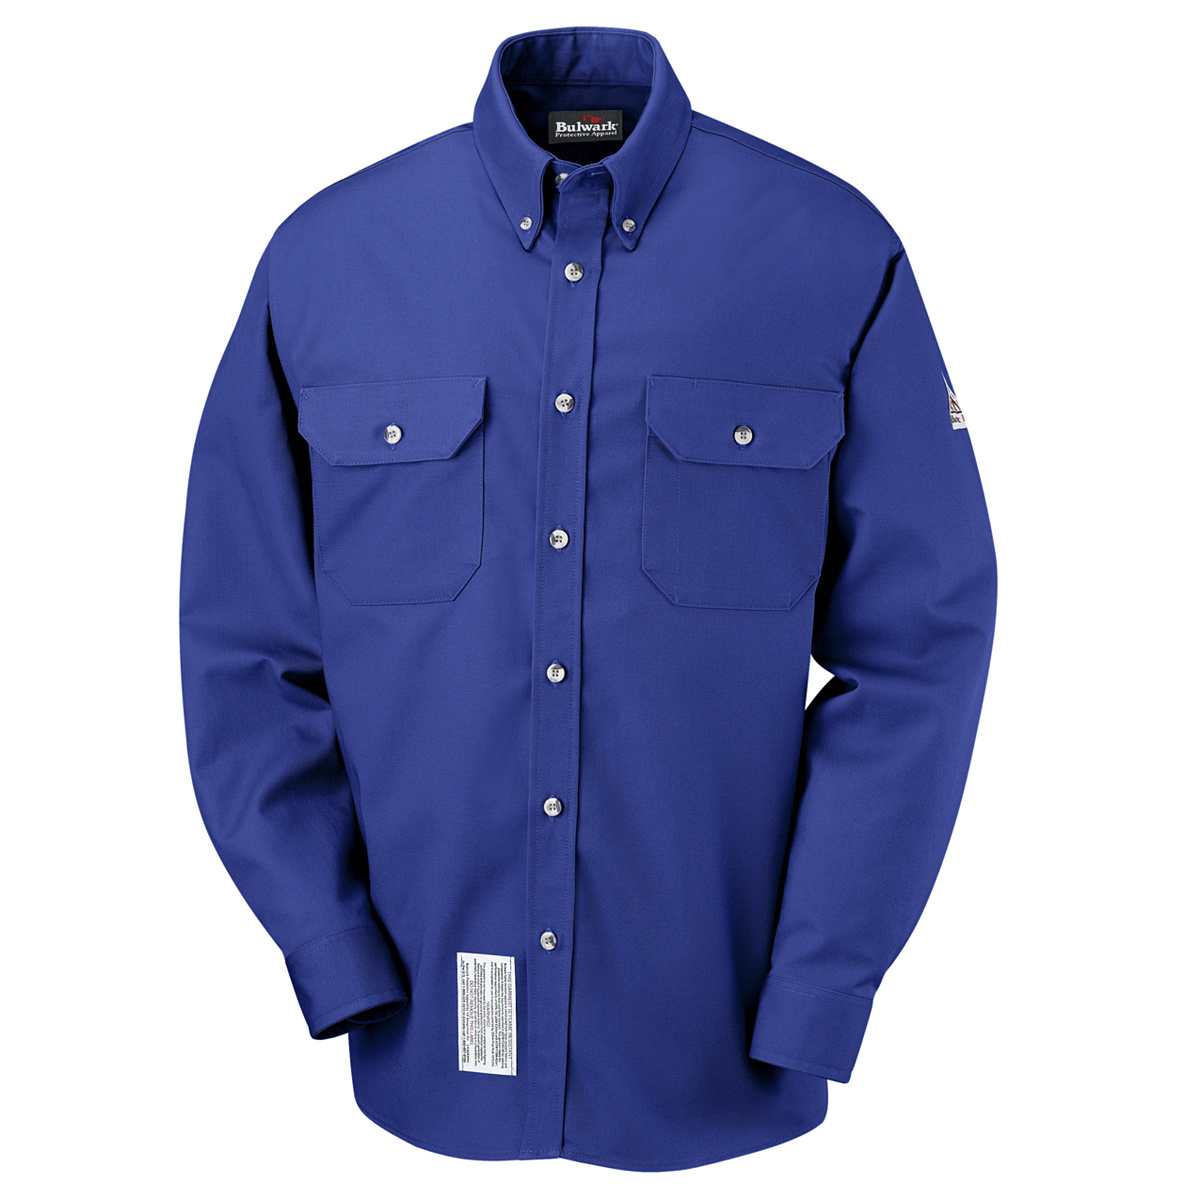 Bulwark® Medium Tall Royal Blue Westex Ultrasoft®/Cotton/Nylon Flame Resistant Dress Shirt With Button Front Closure